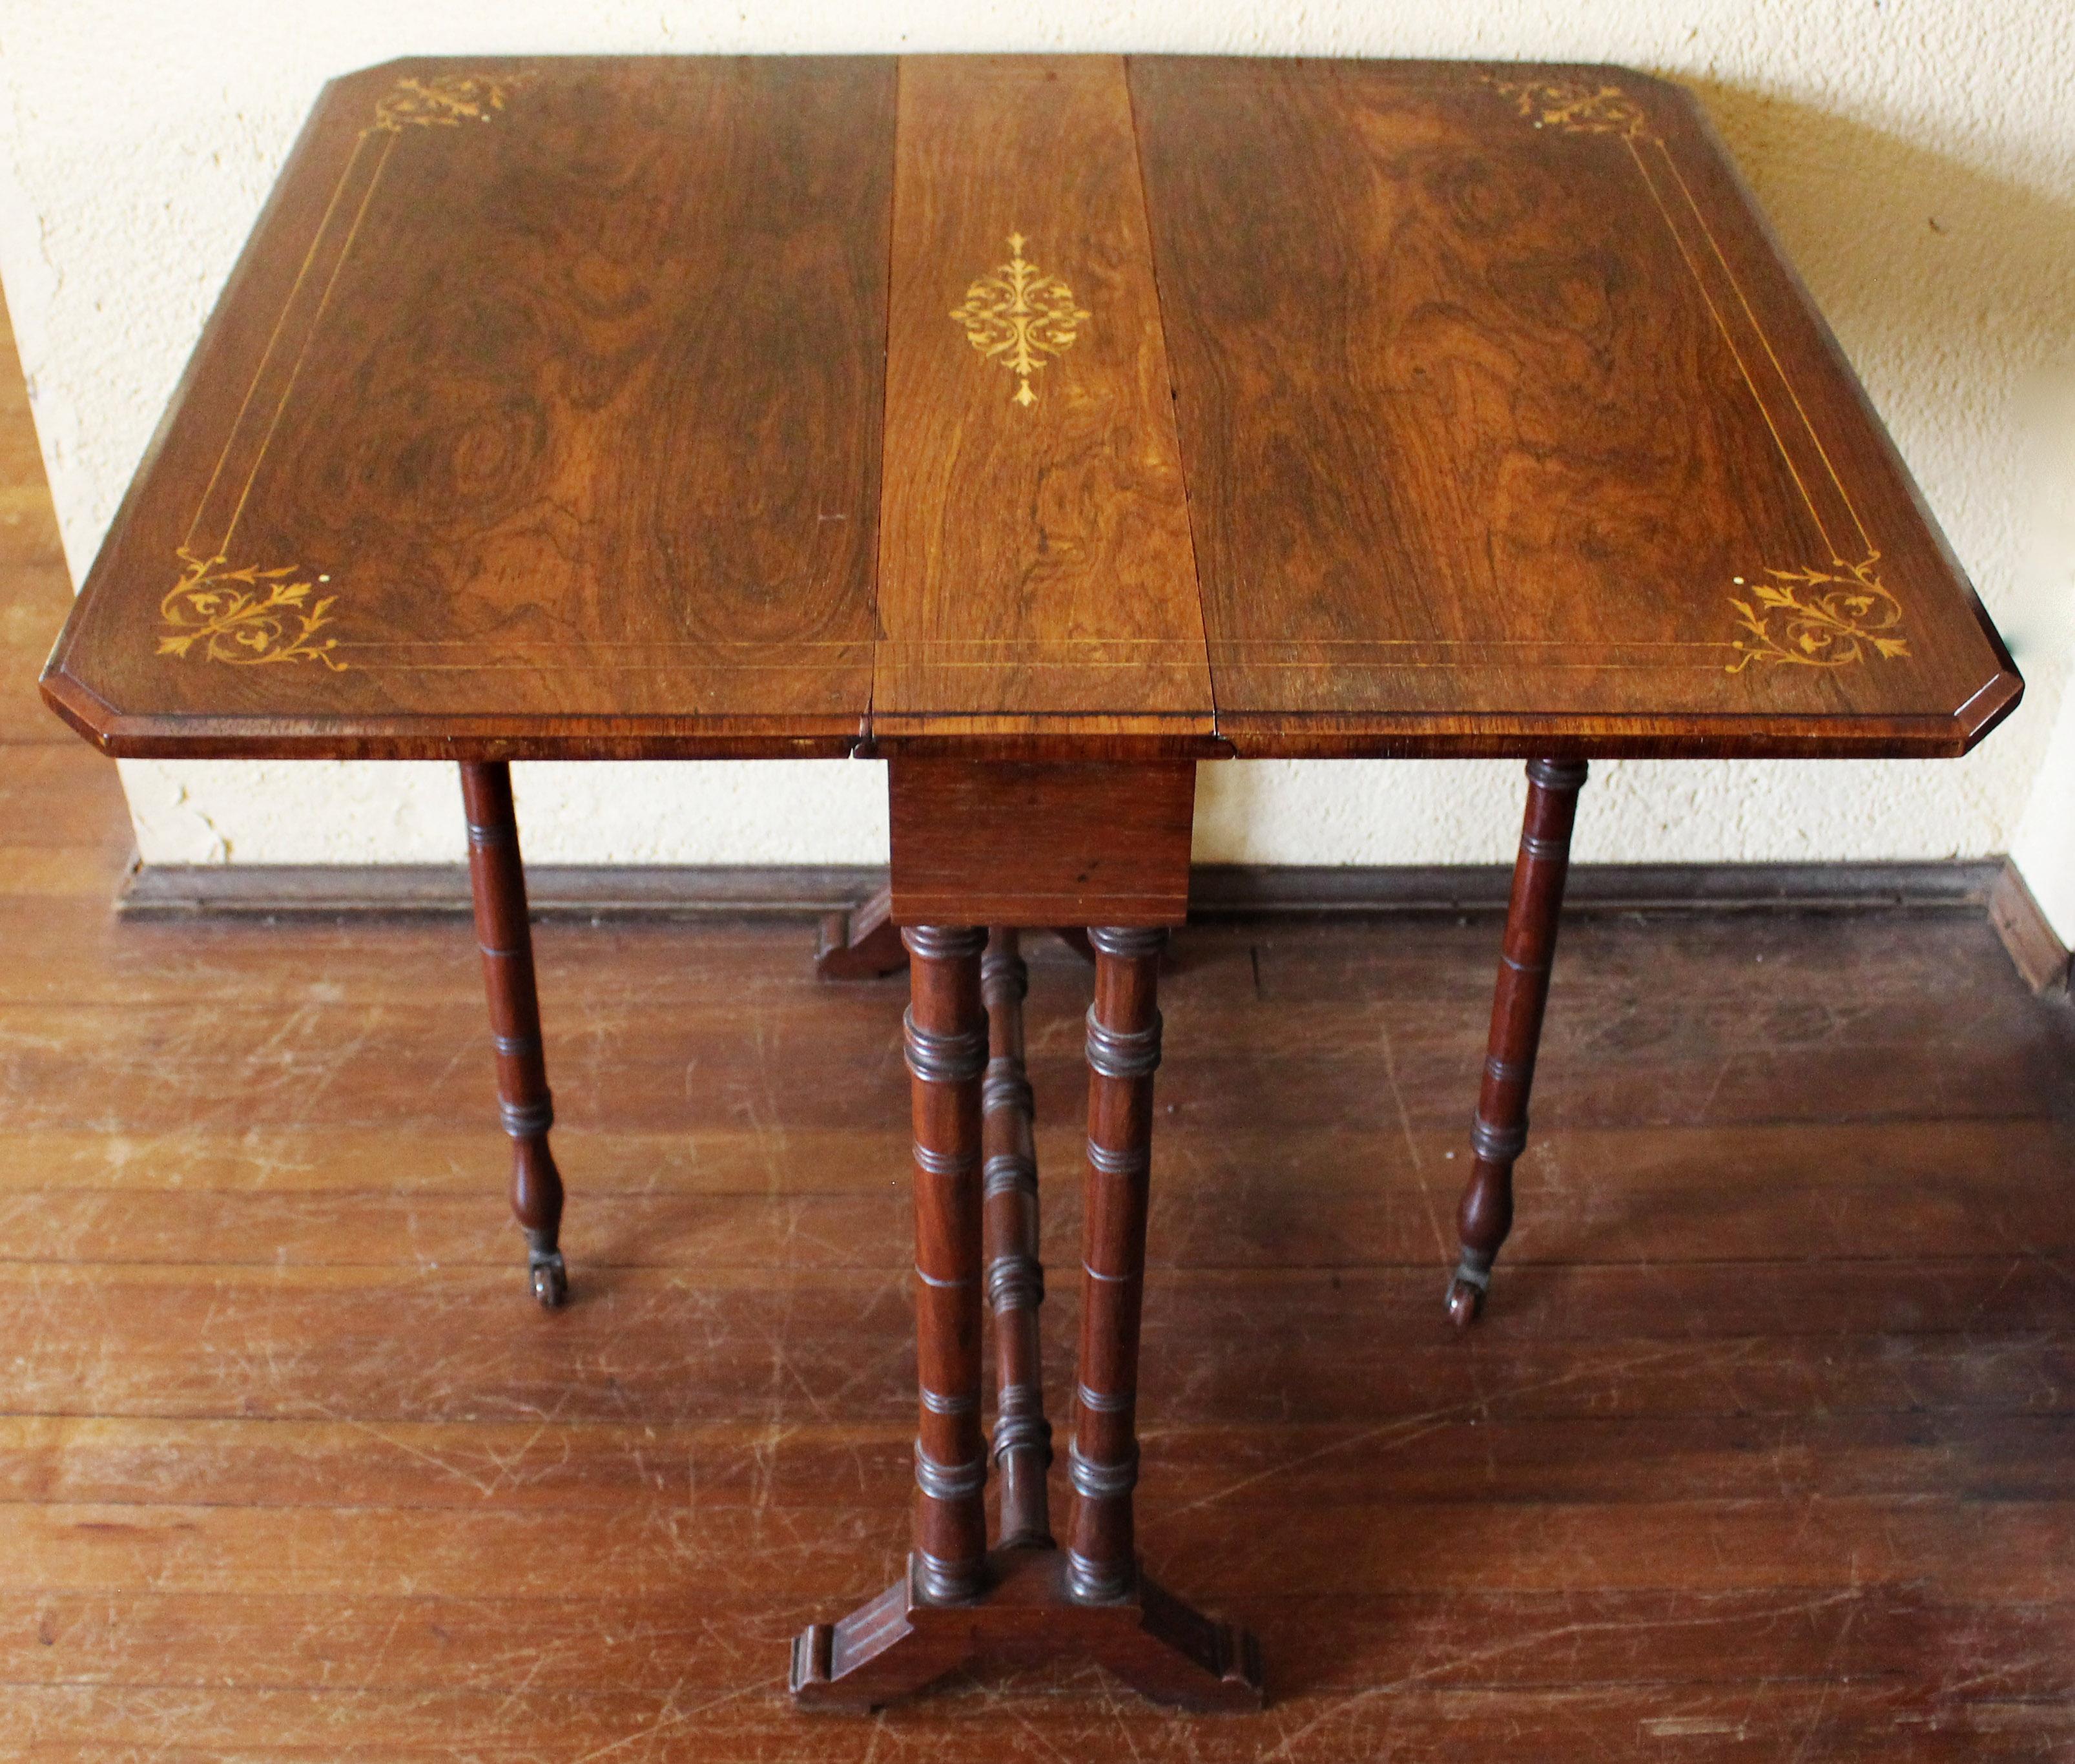 Wood Late Nineteenth Century English Sutherland Table